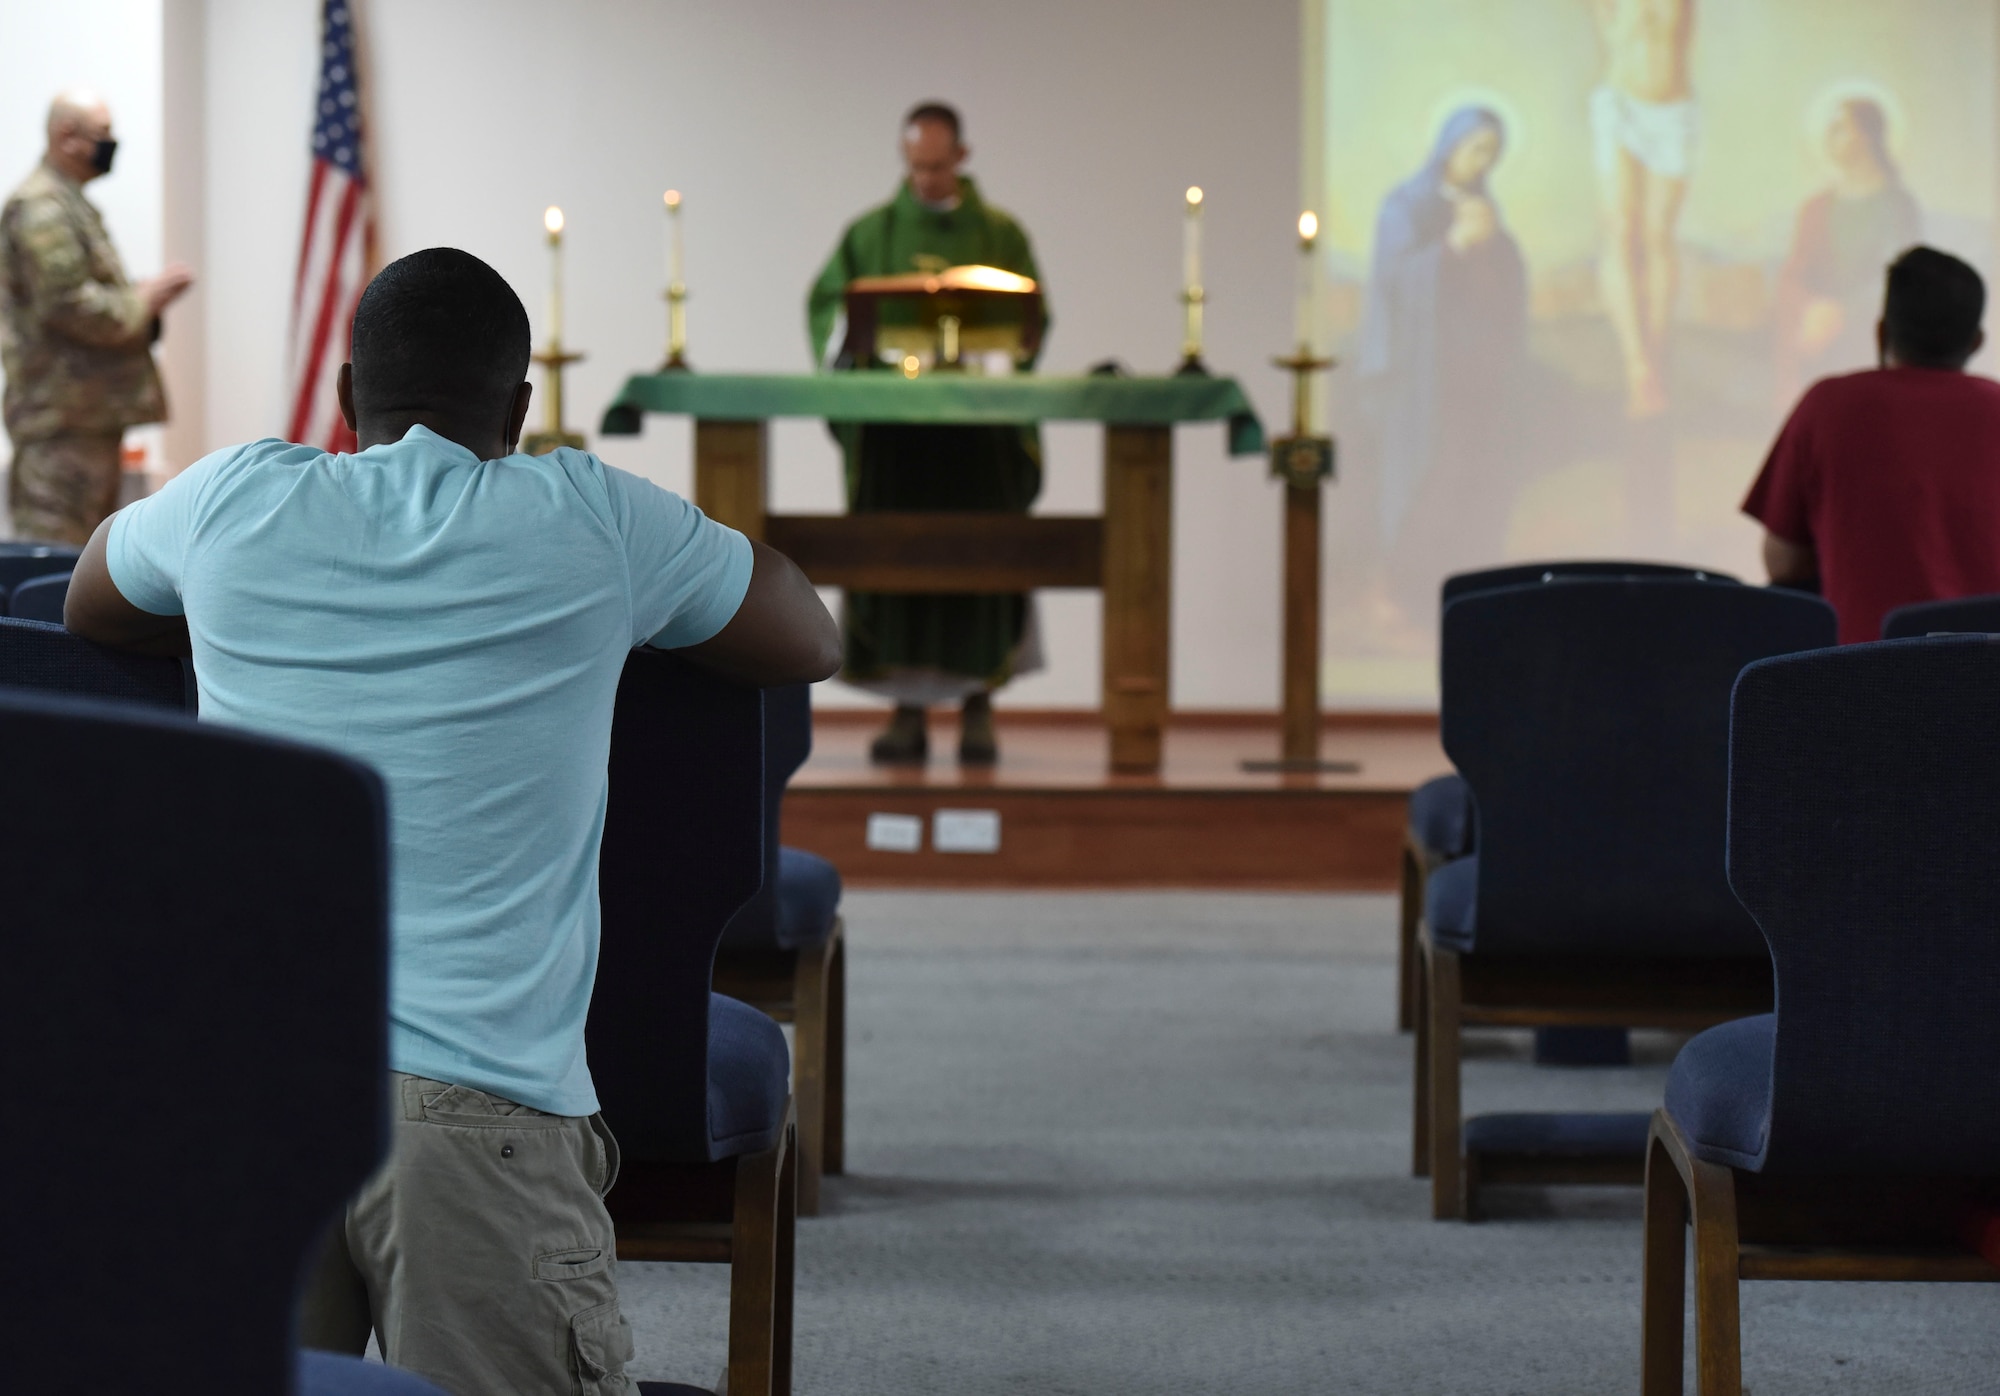 Chapel attendees pray during a Catholic service at Ali Al Salem Air Base, Kuwait, Oct. 26, 2020.